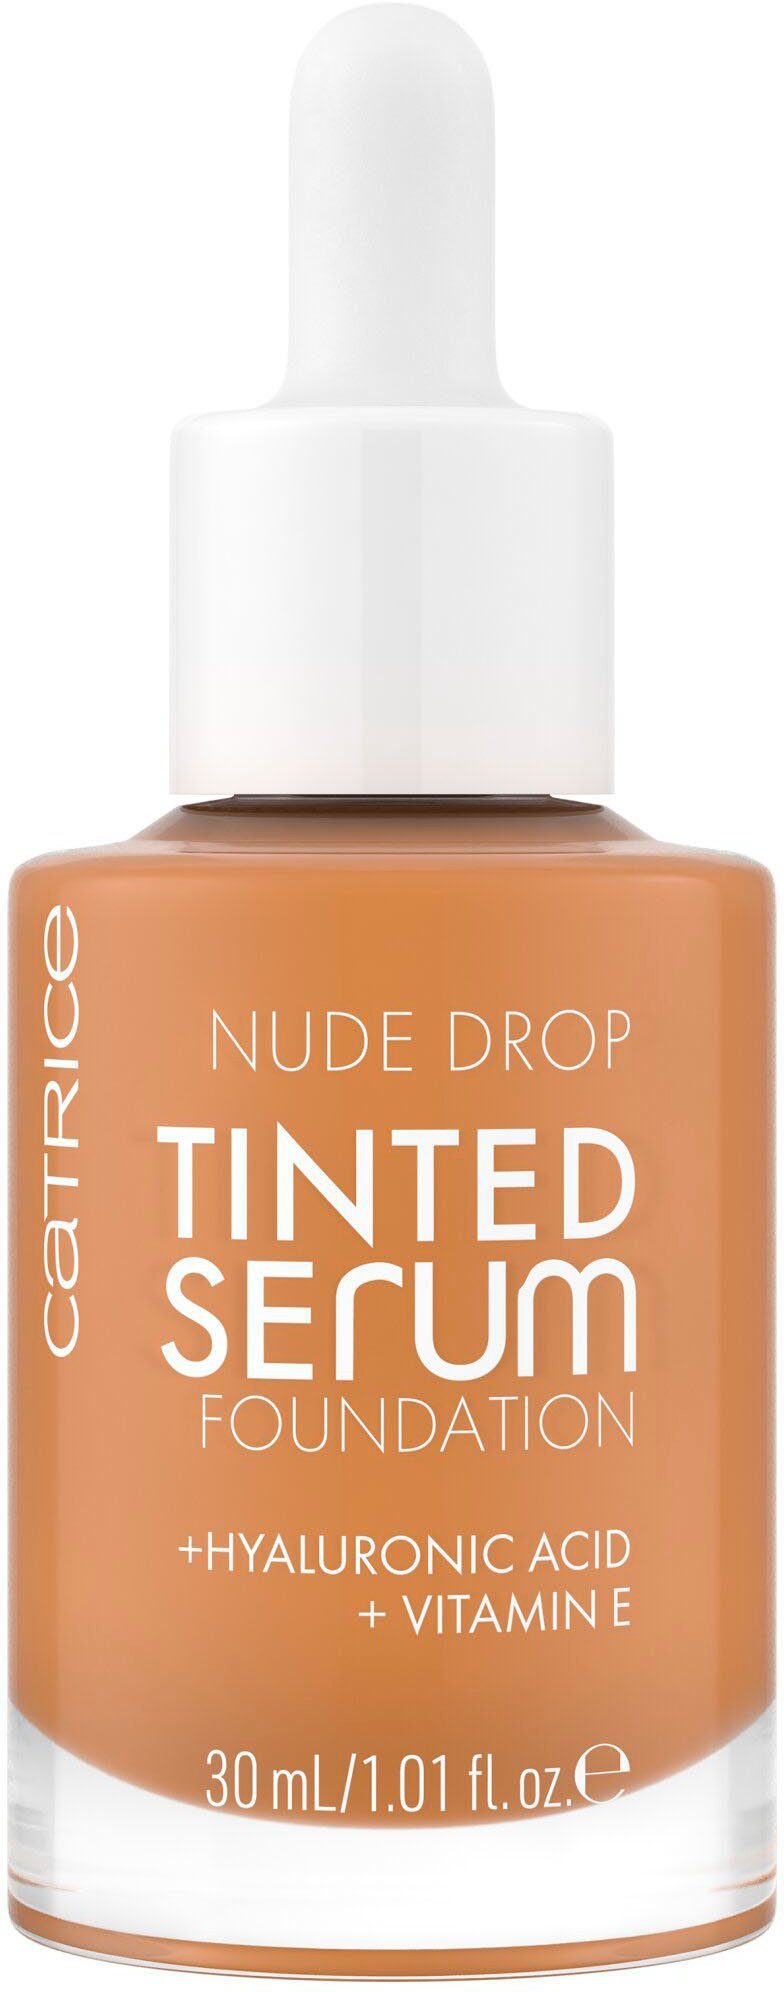 Foundation Foundation Serum nude Tinted Drop Nude Catrice 075C